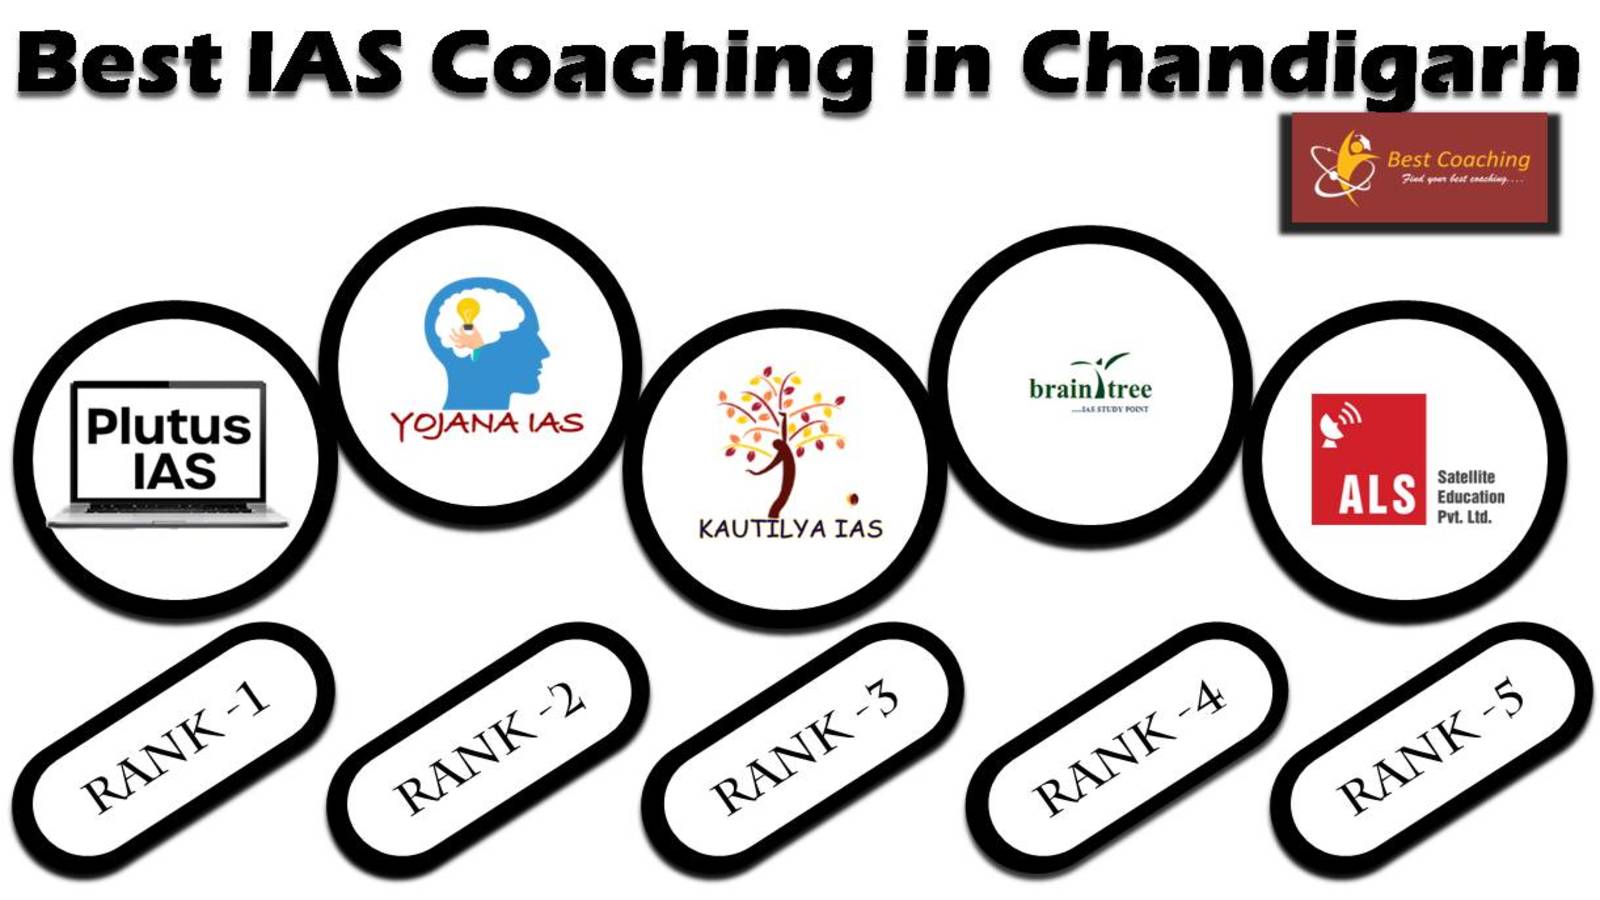 Top10 IAS Coaching Institutes In Chandigarh